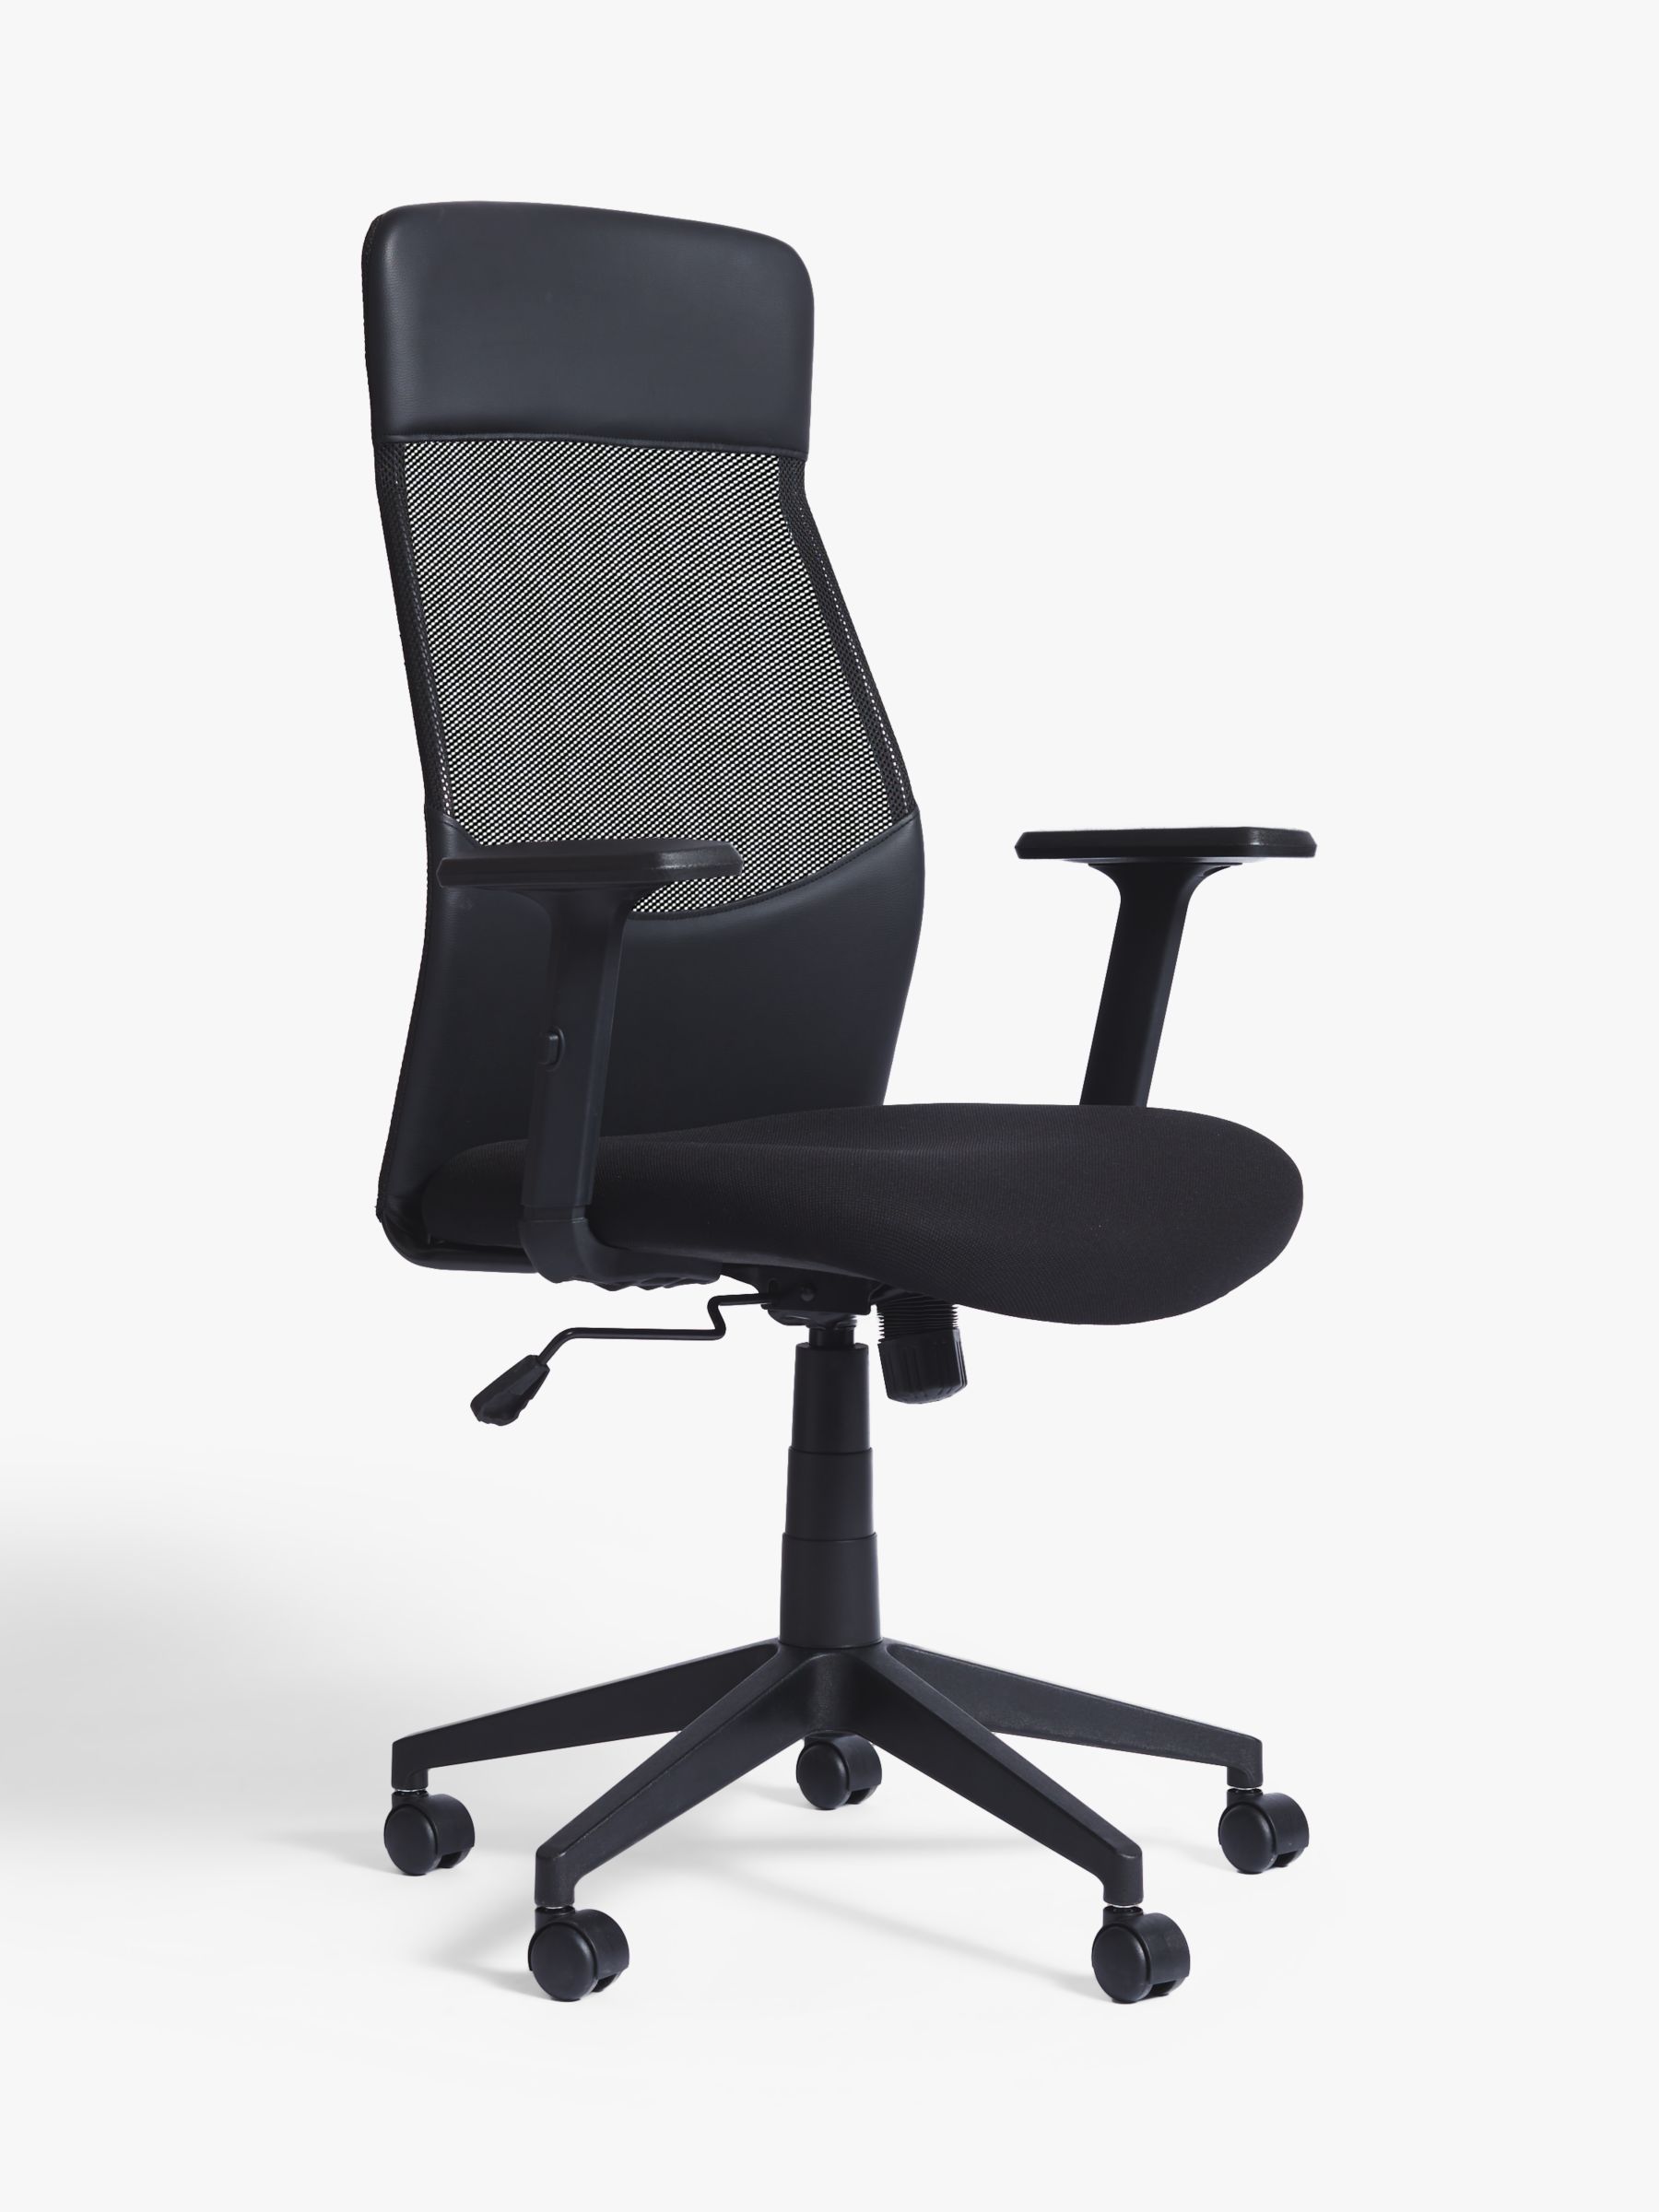 Night Star Lumbar Support Office Chair